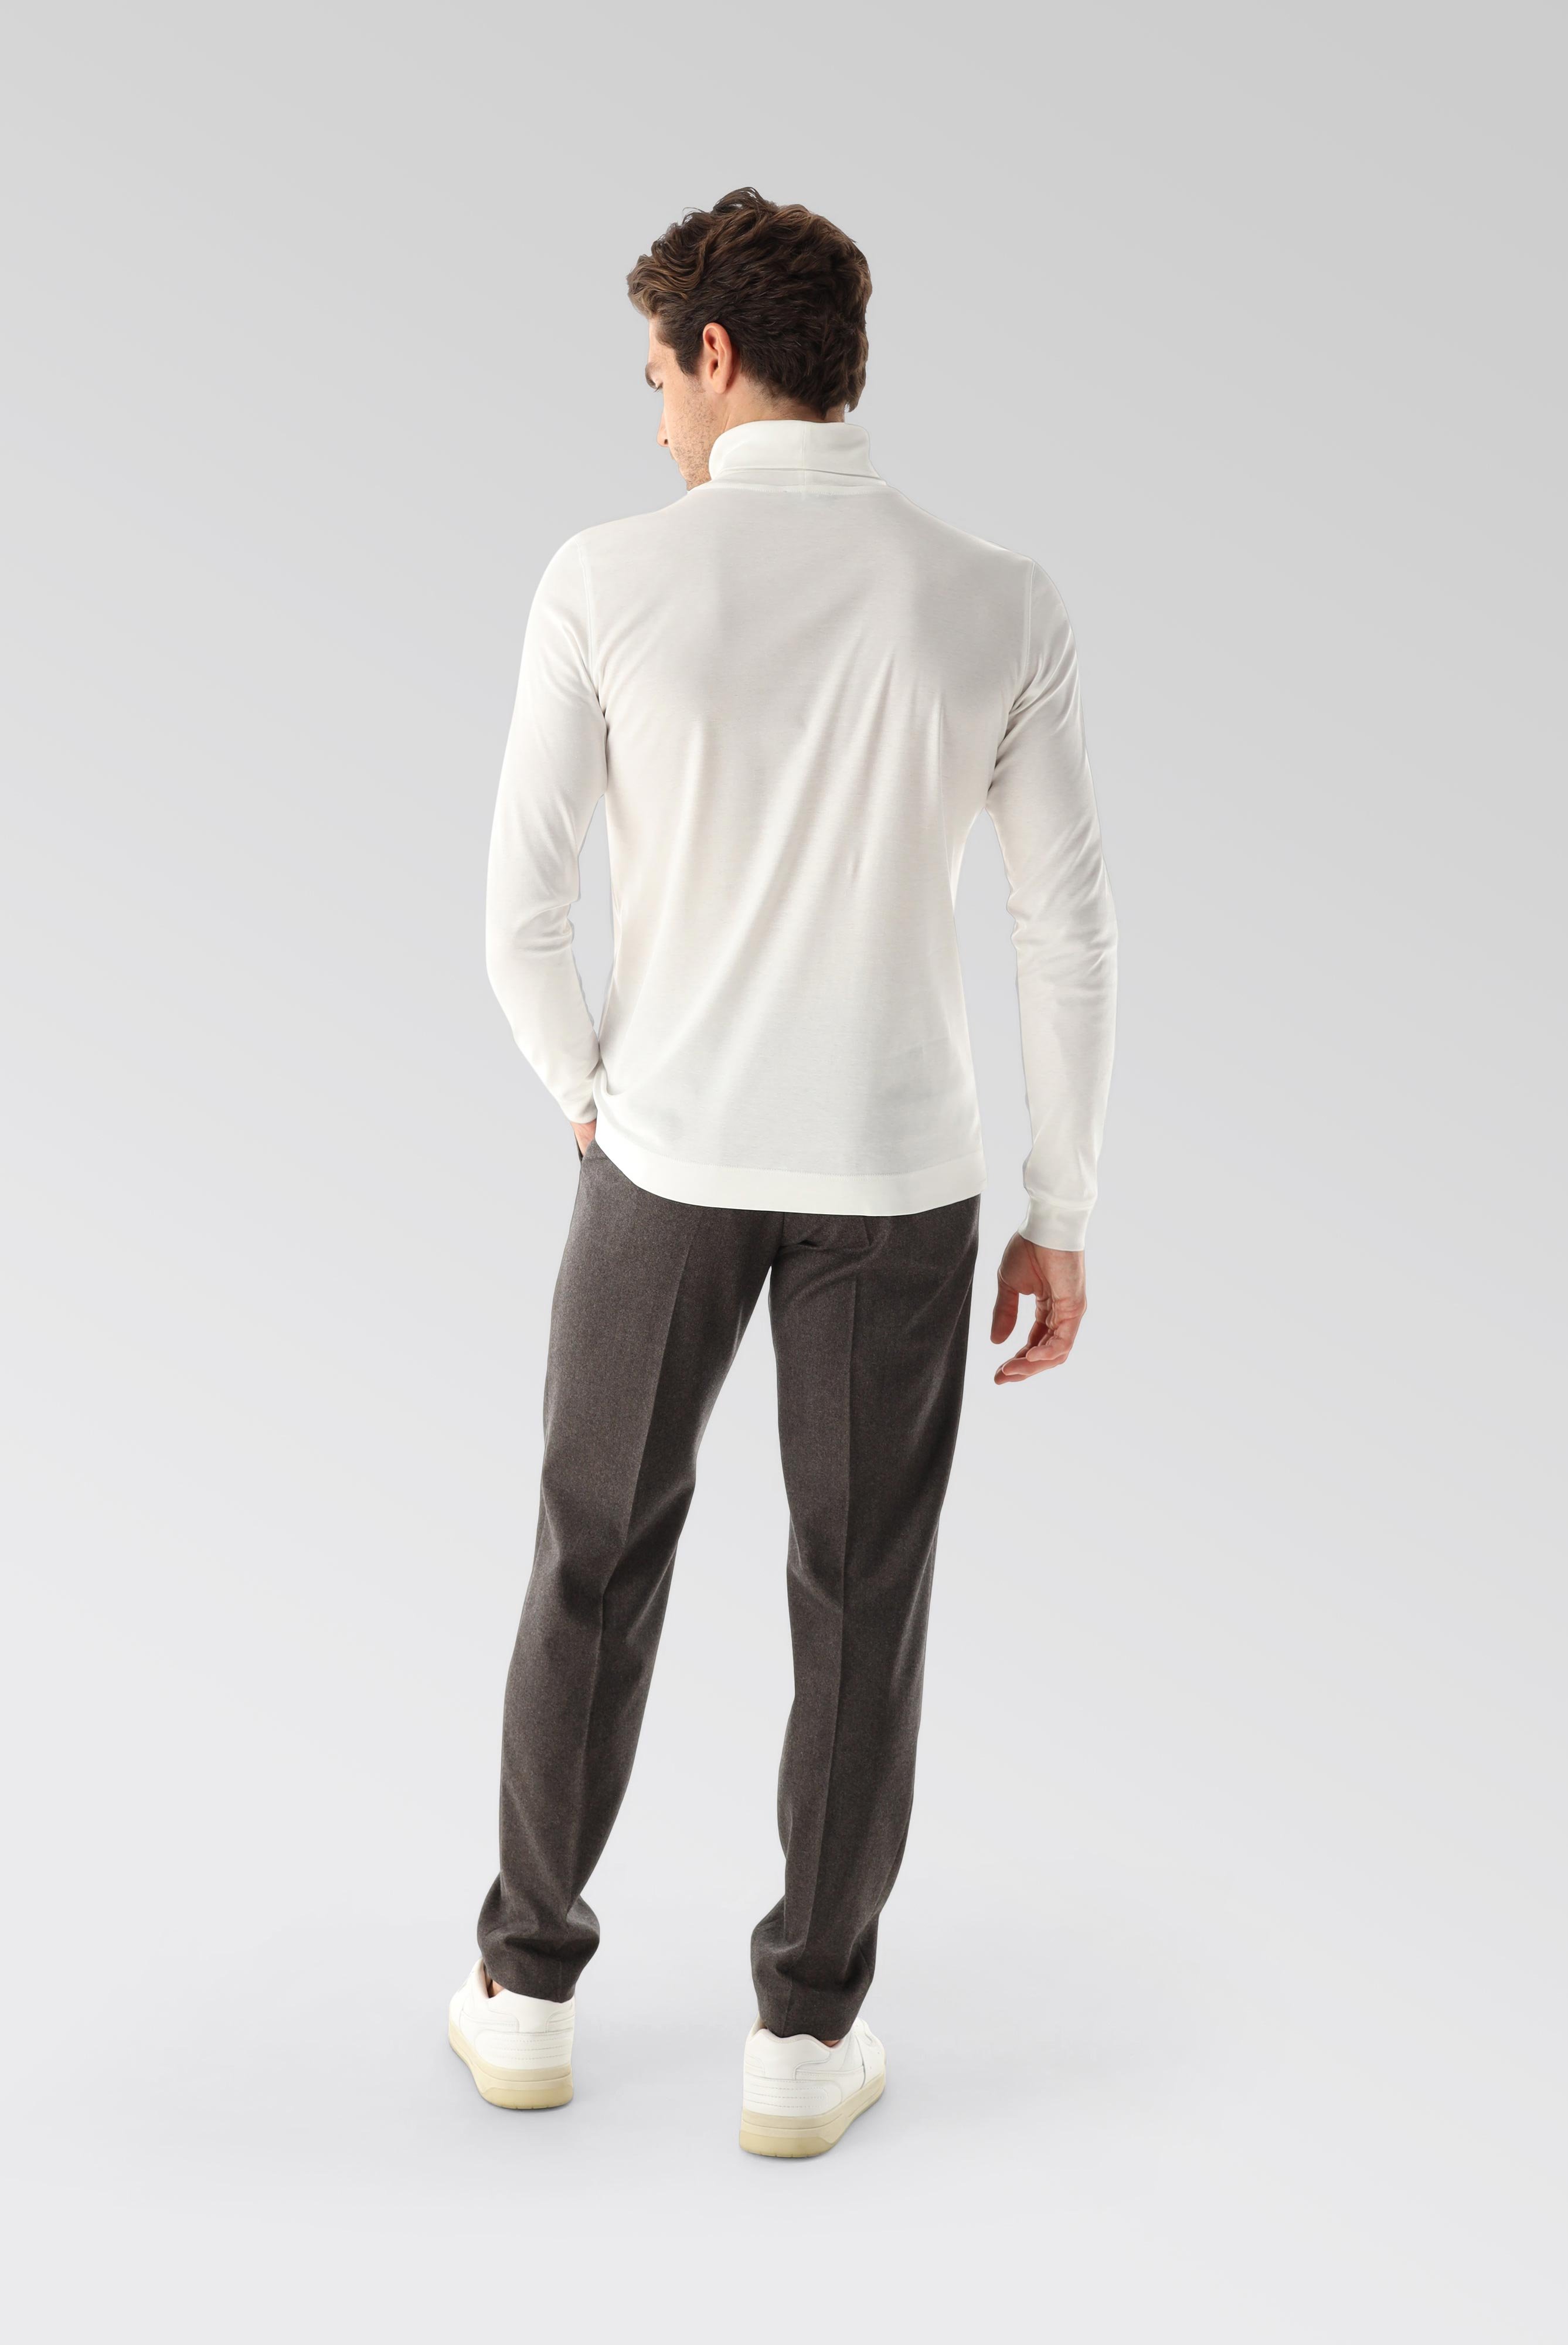 T-Shirts+Swiss Cotton Jersey Turtleneck Shirt+20.1719.UX.180031.000.XL